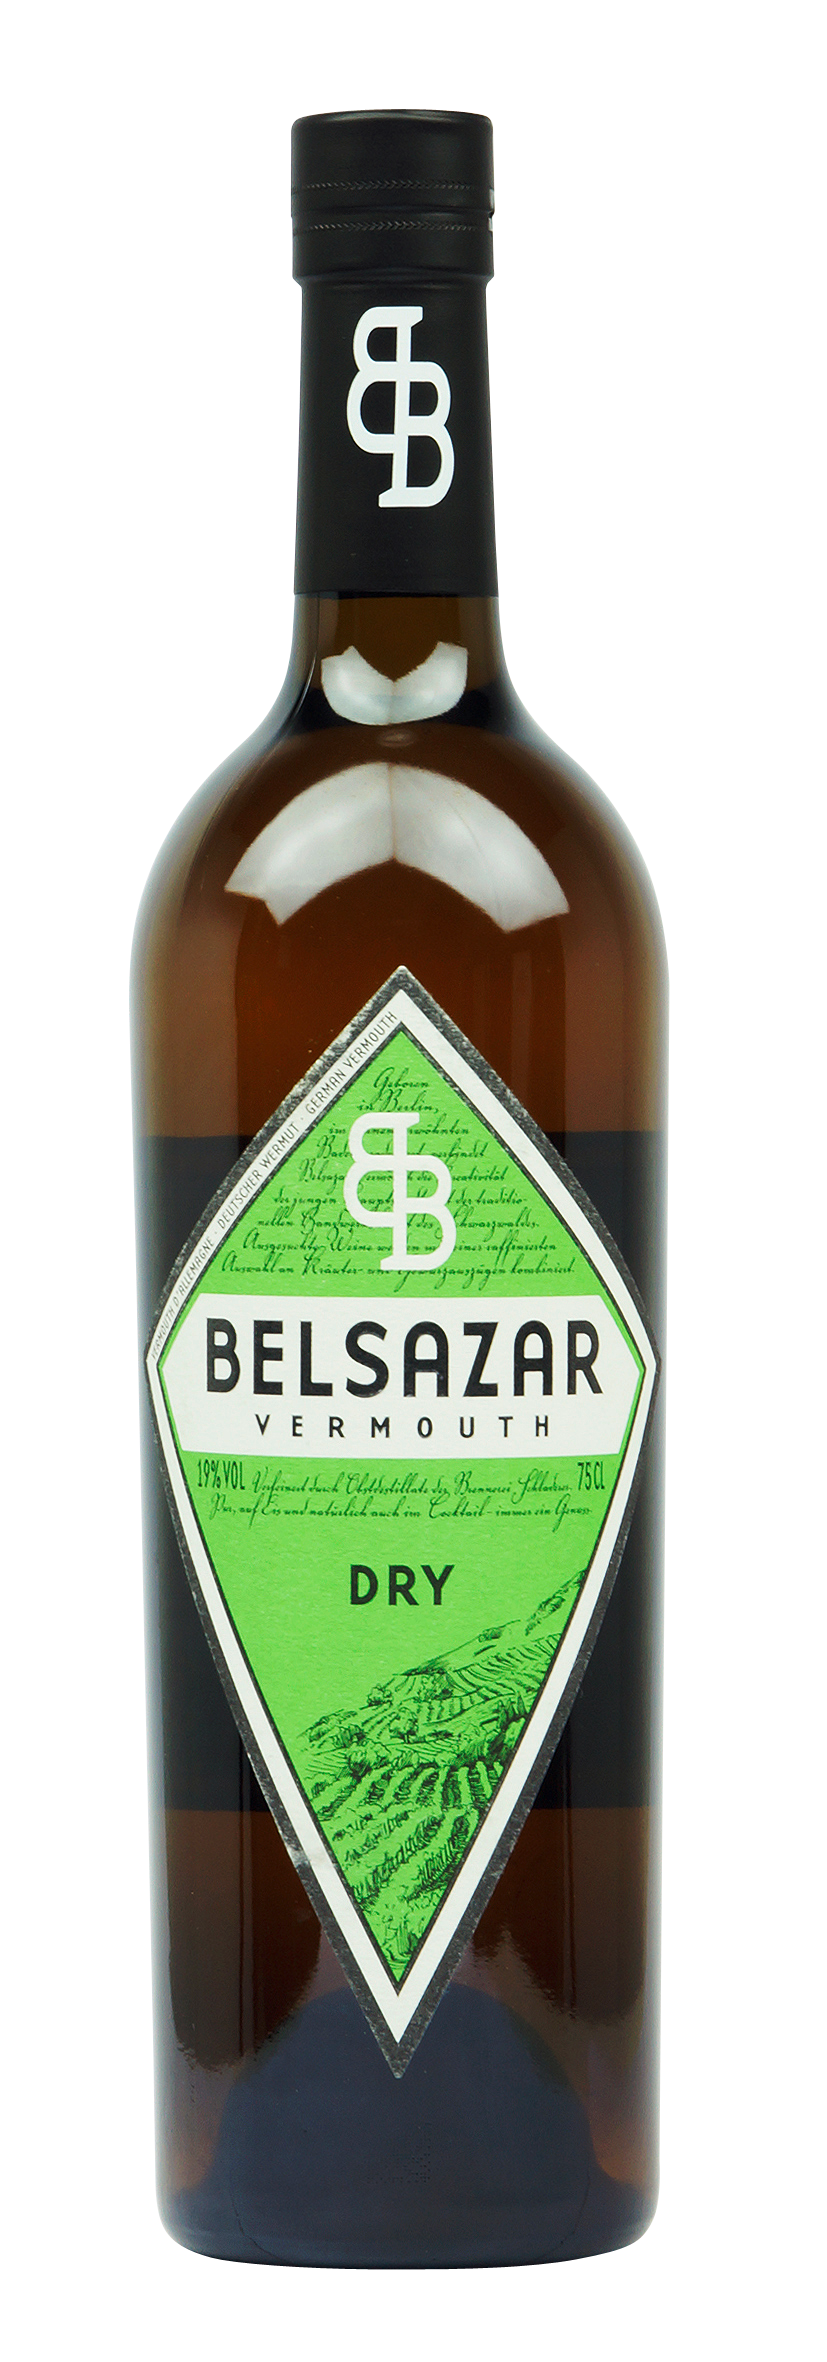 Belsazar Vermouth Dry 0